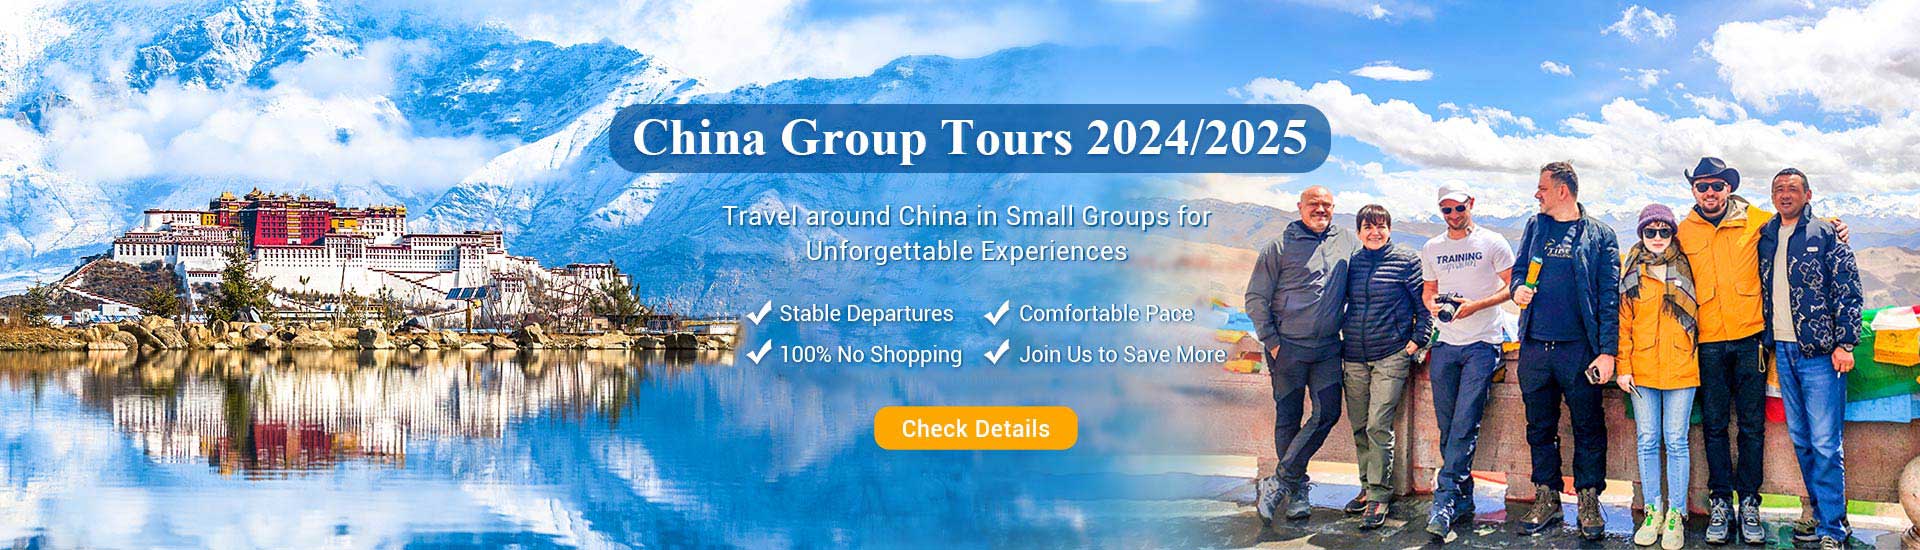 China Group Tours